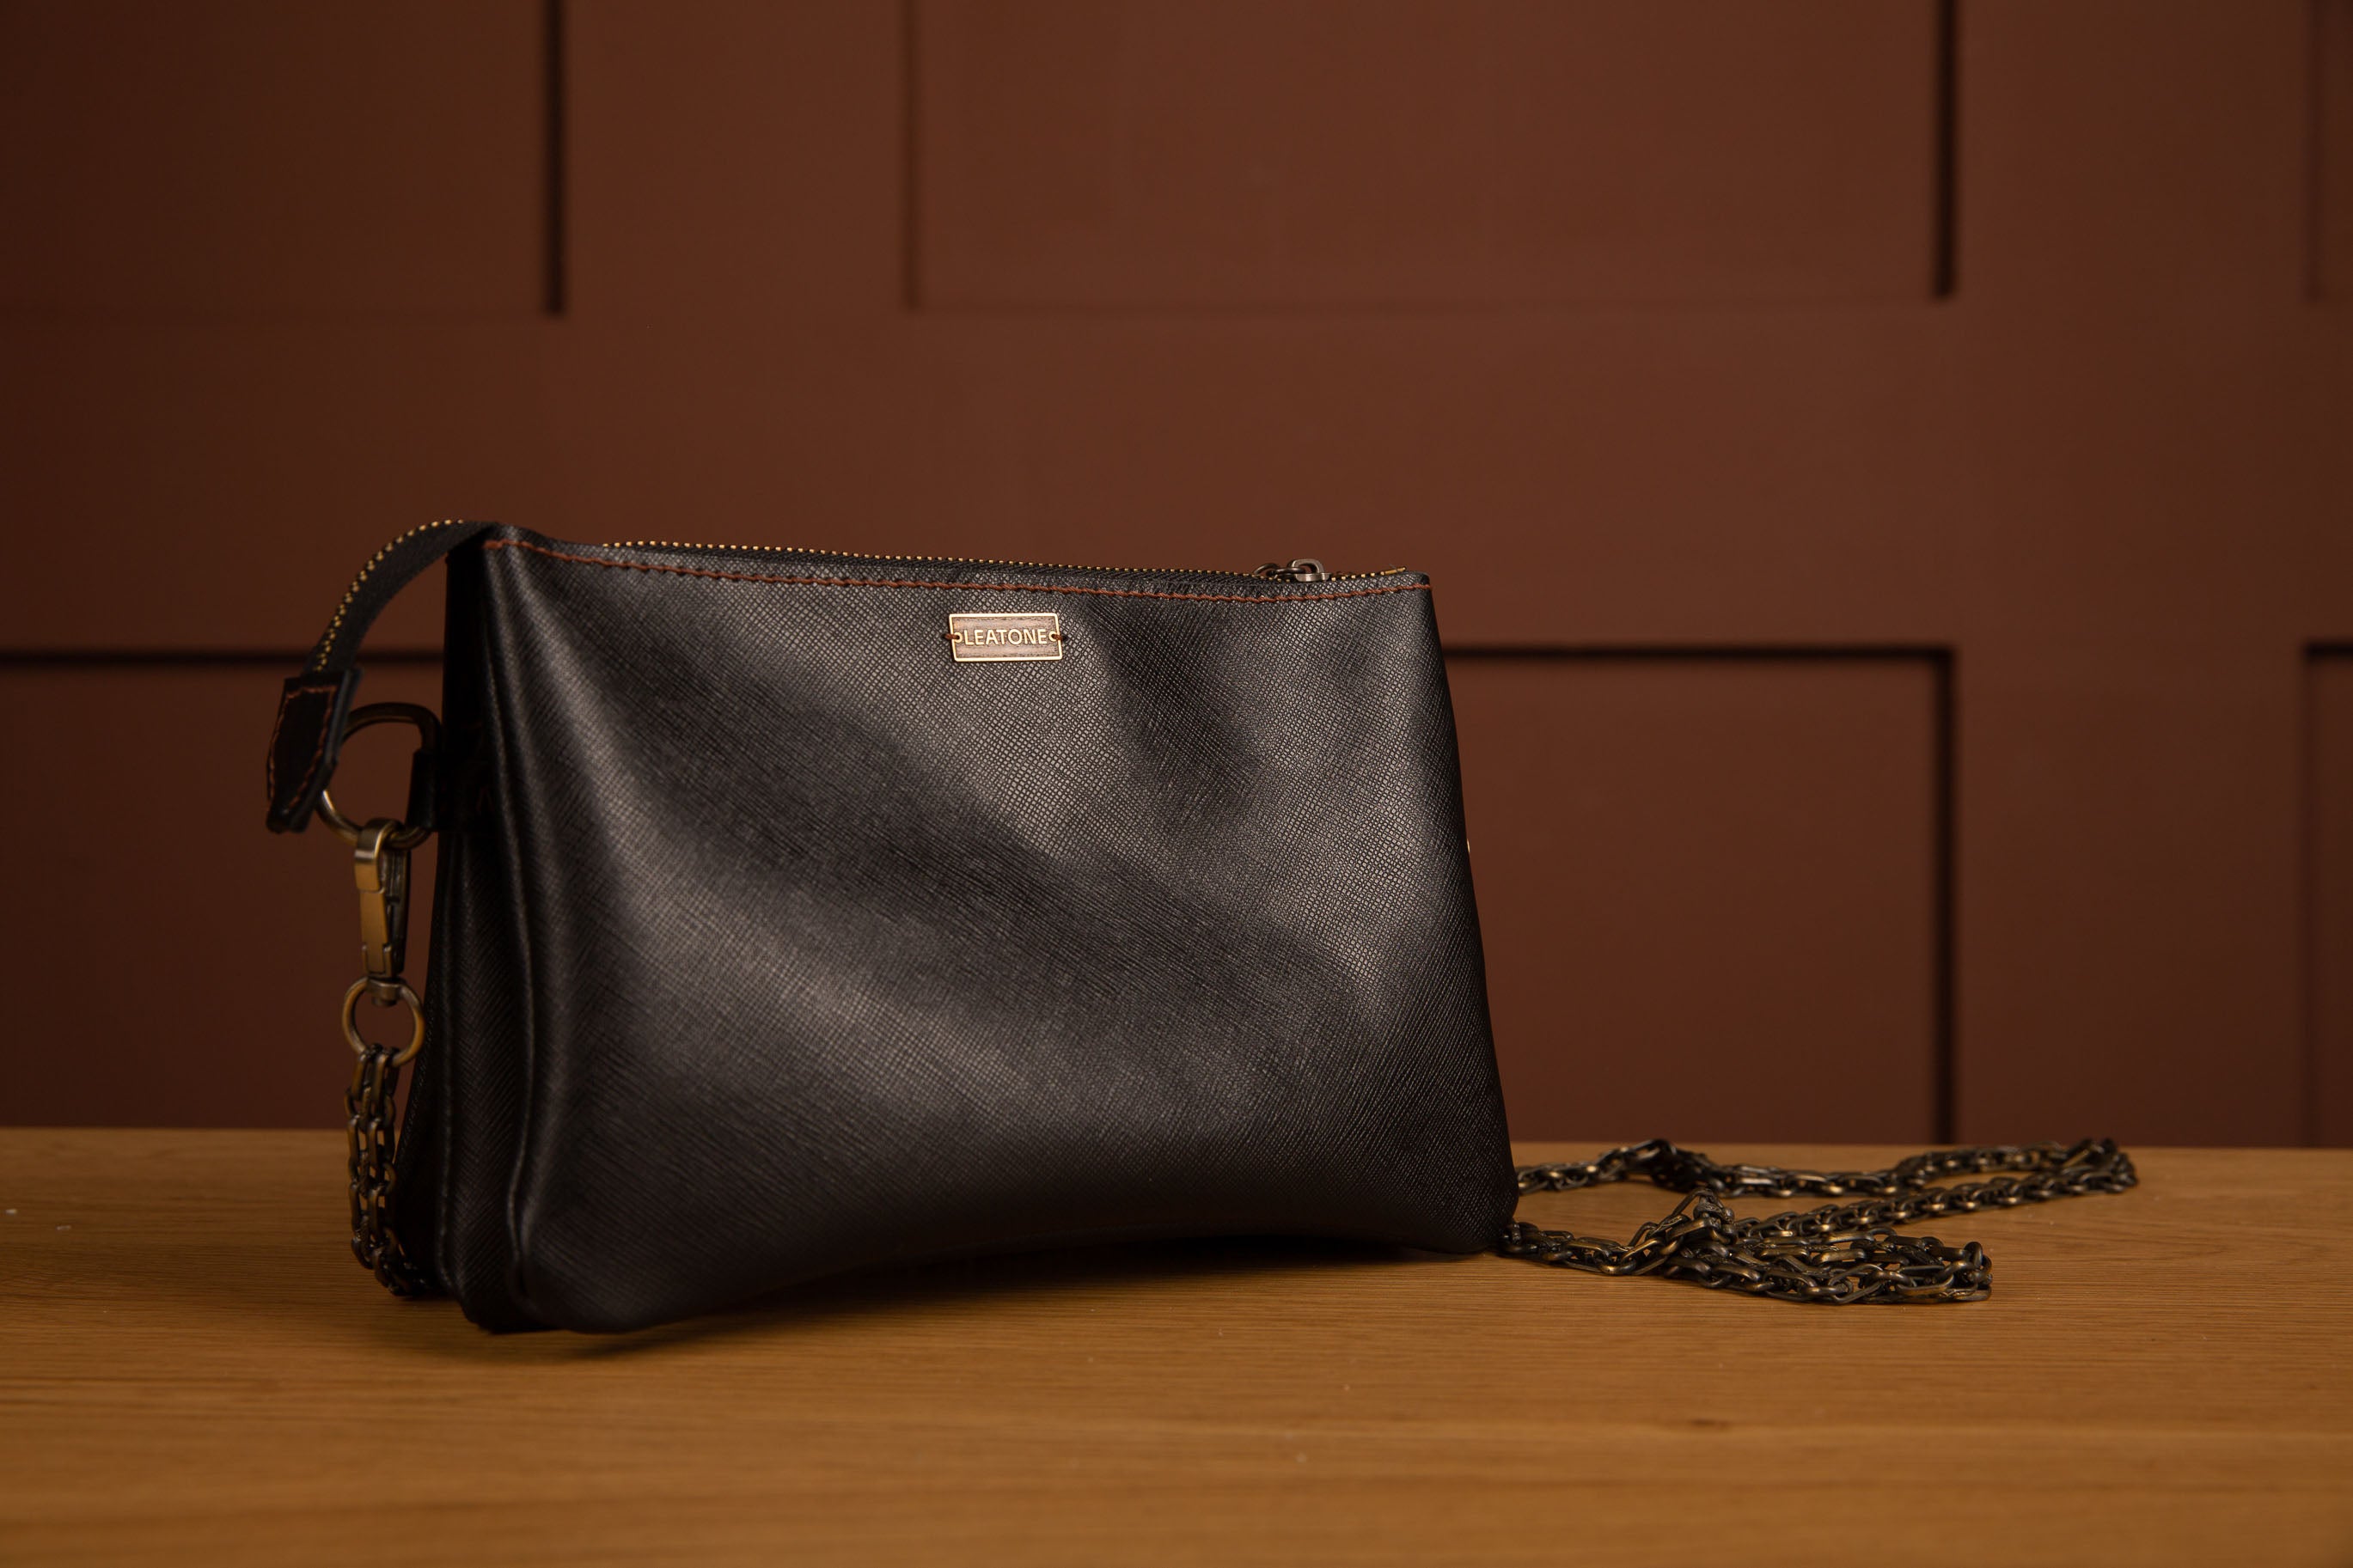 Handbags for Women, Women's Crossbody, Totes & Clutches